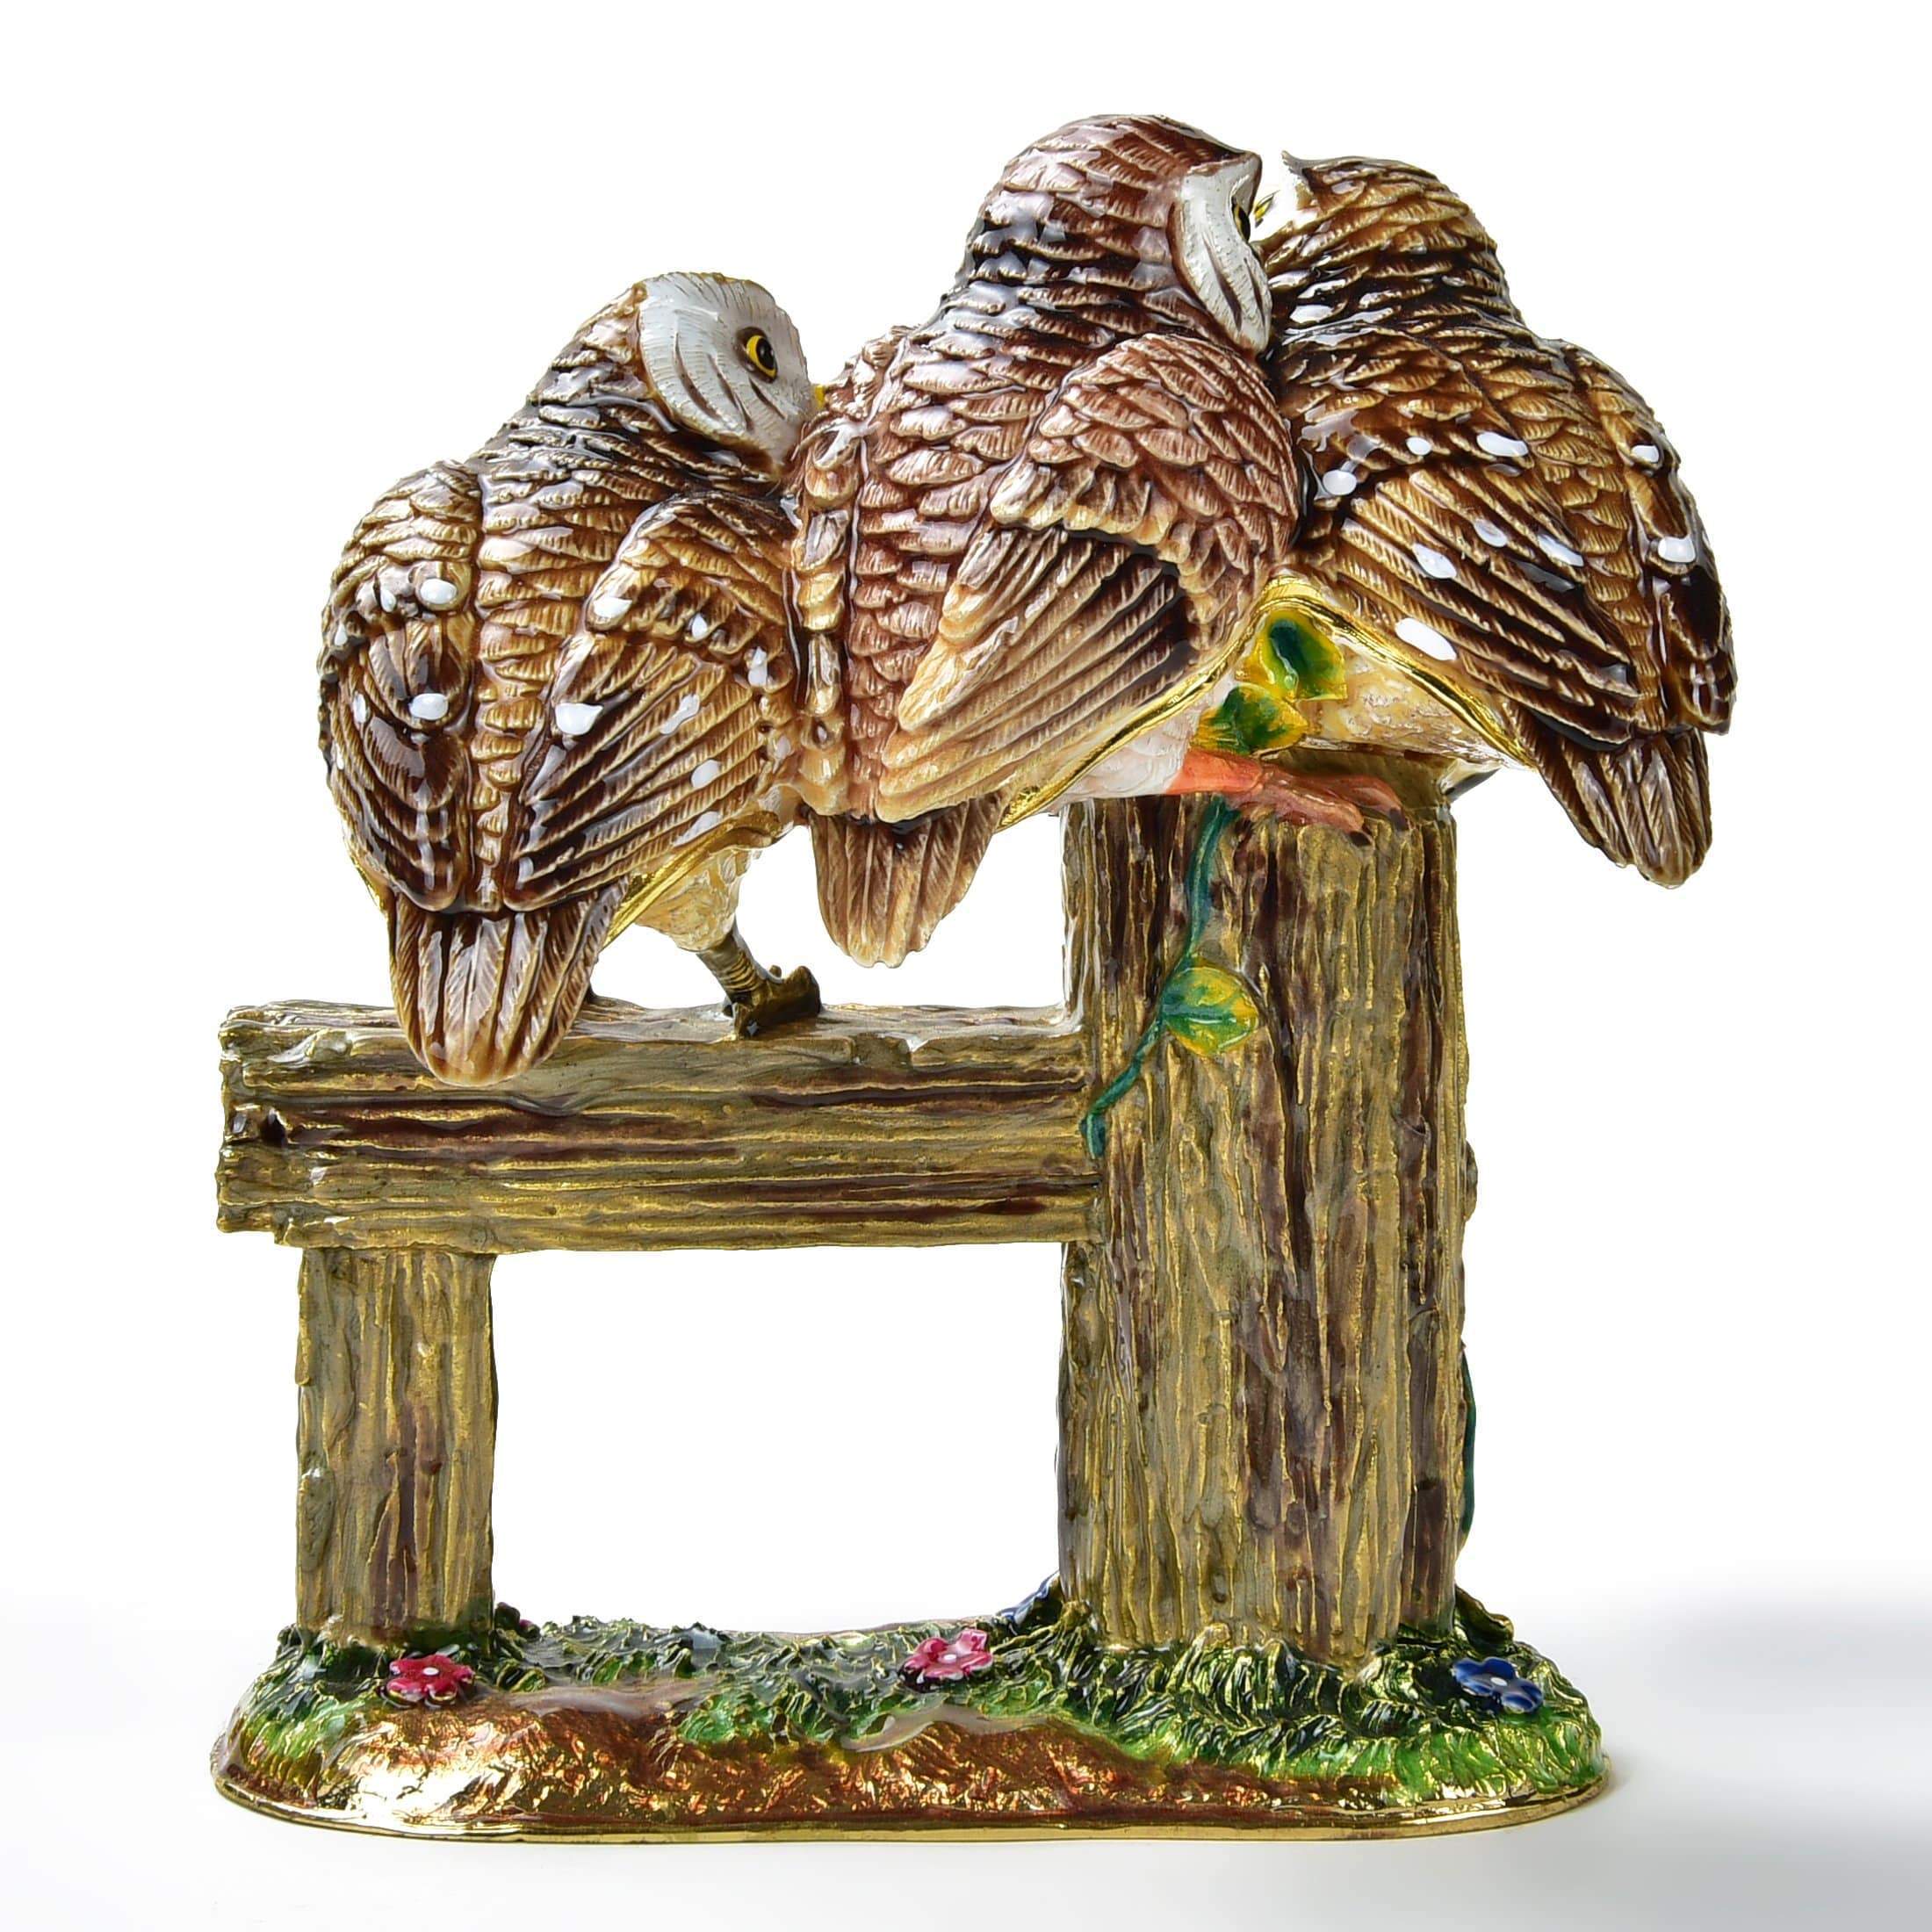 Kalifano Vanity Figurine Owl Family on Branch Figurine Keepsake Box made with Crystals SVA-088